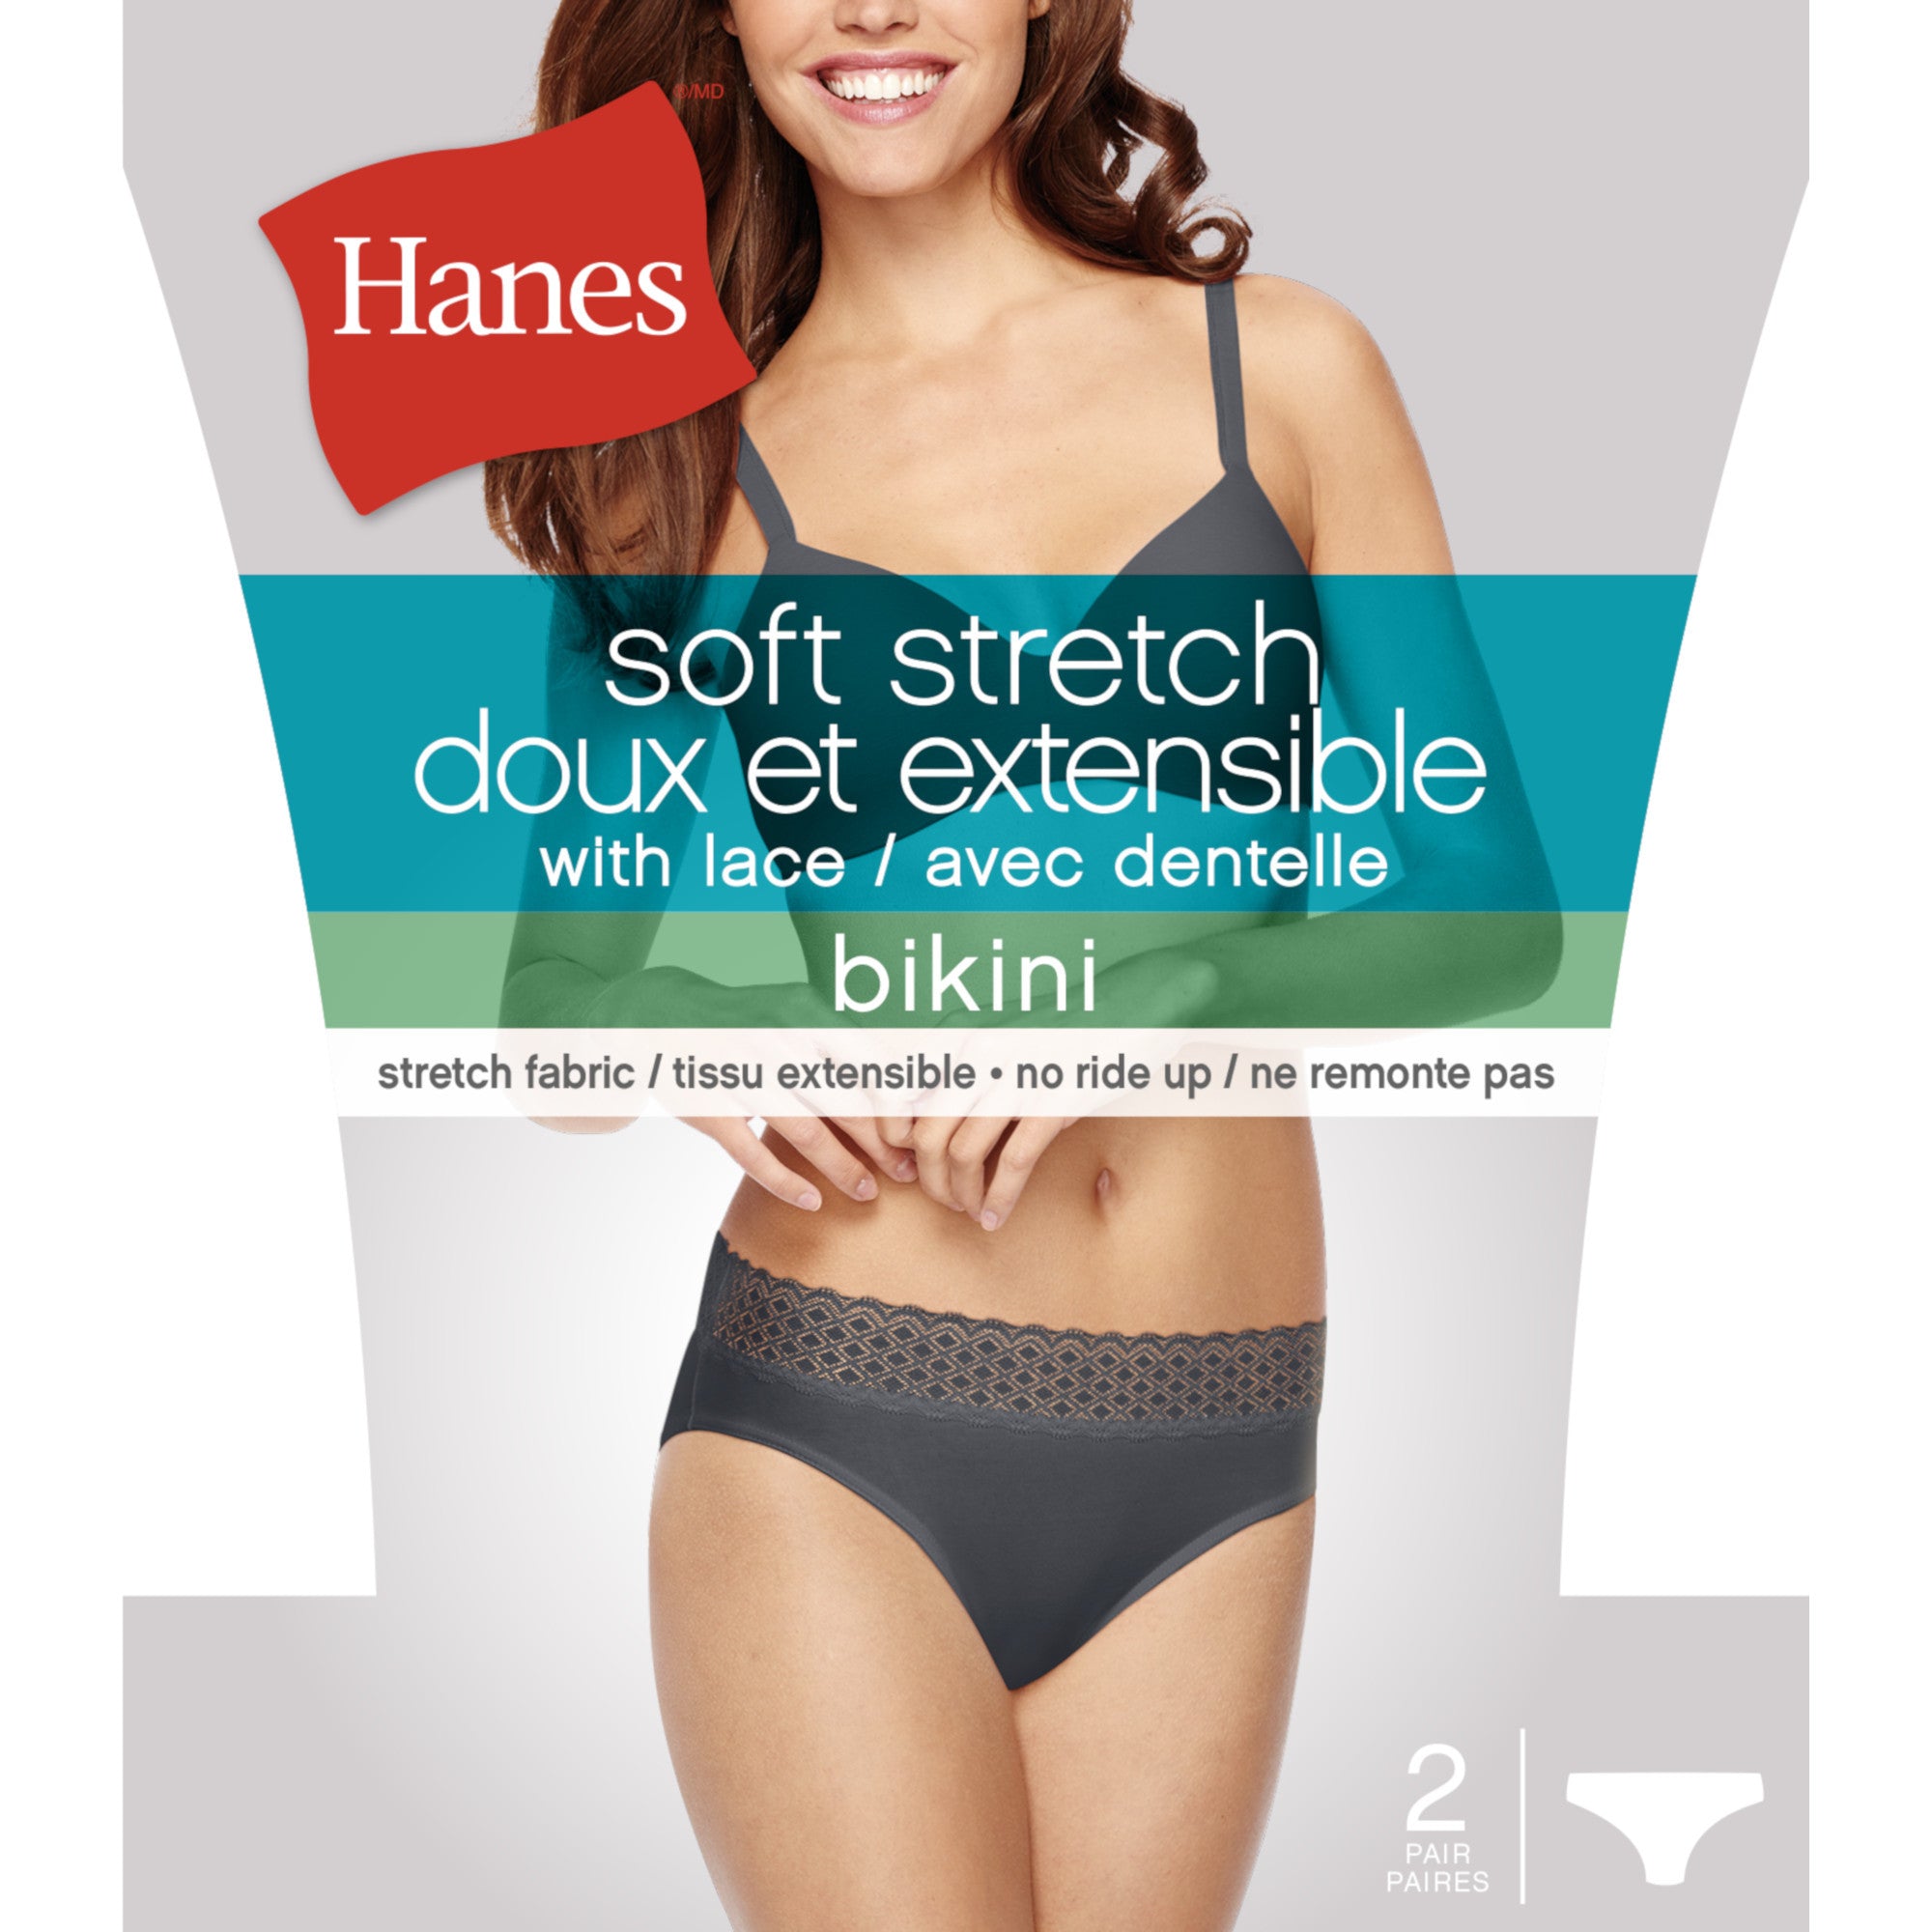 Hanes Women's Soft Stretch Lace Bikini Underwear, 2-Pack, Anthracite